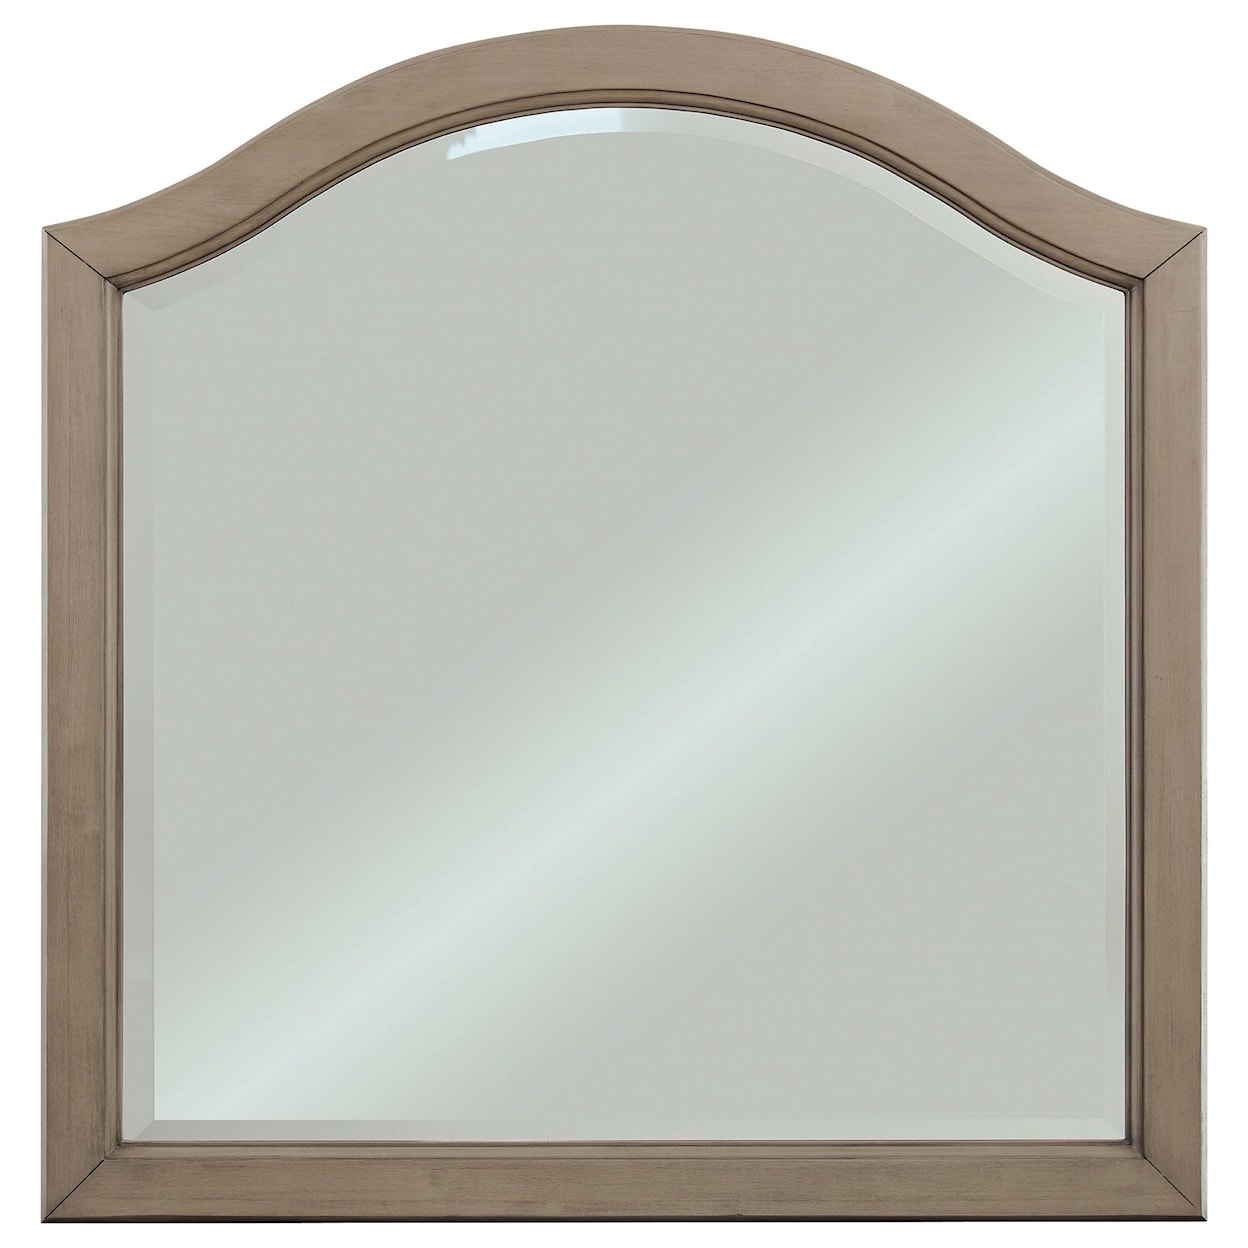 Benchcraft Lettner Bedroom Mirror